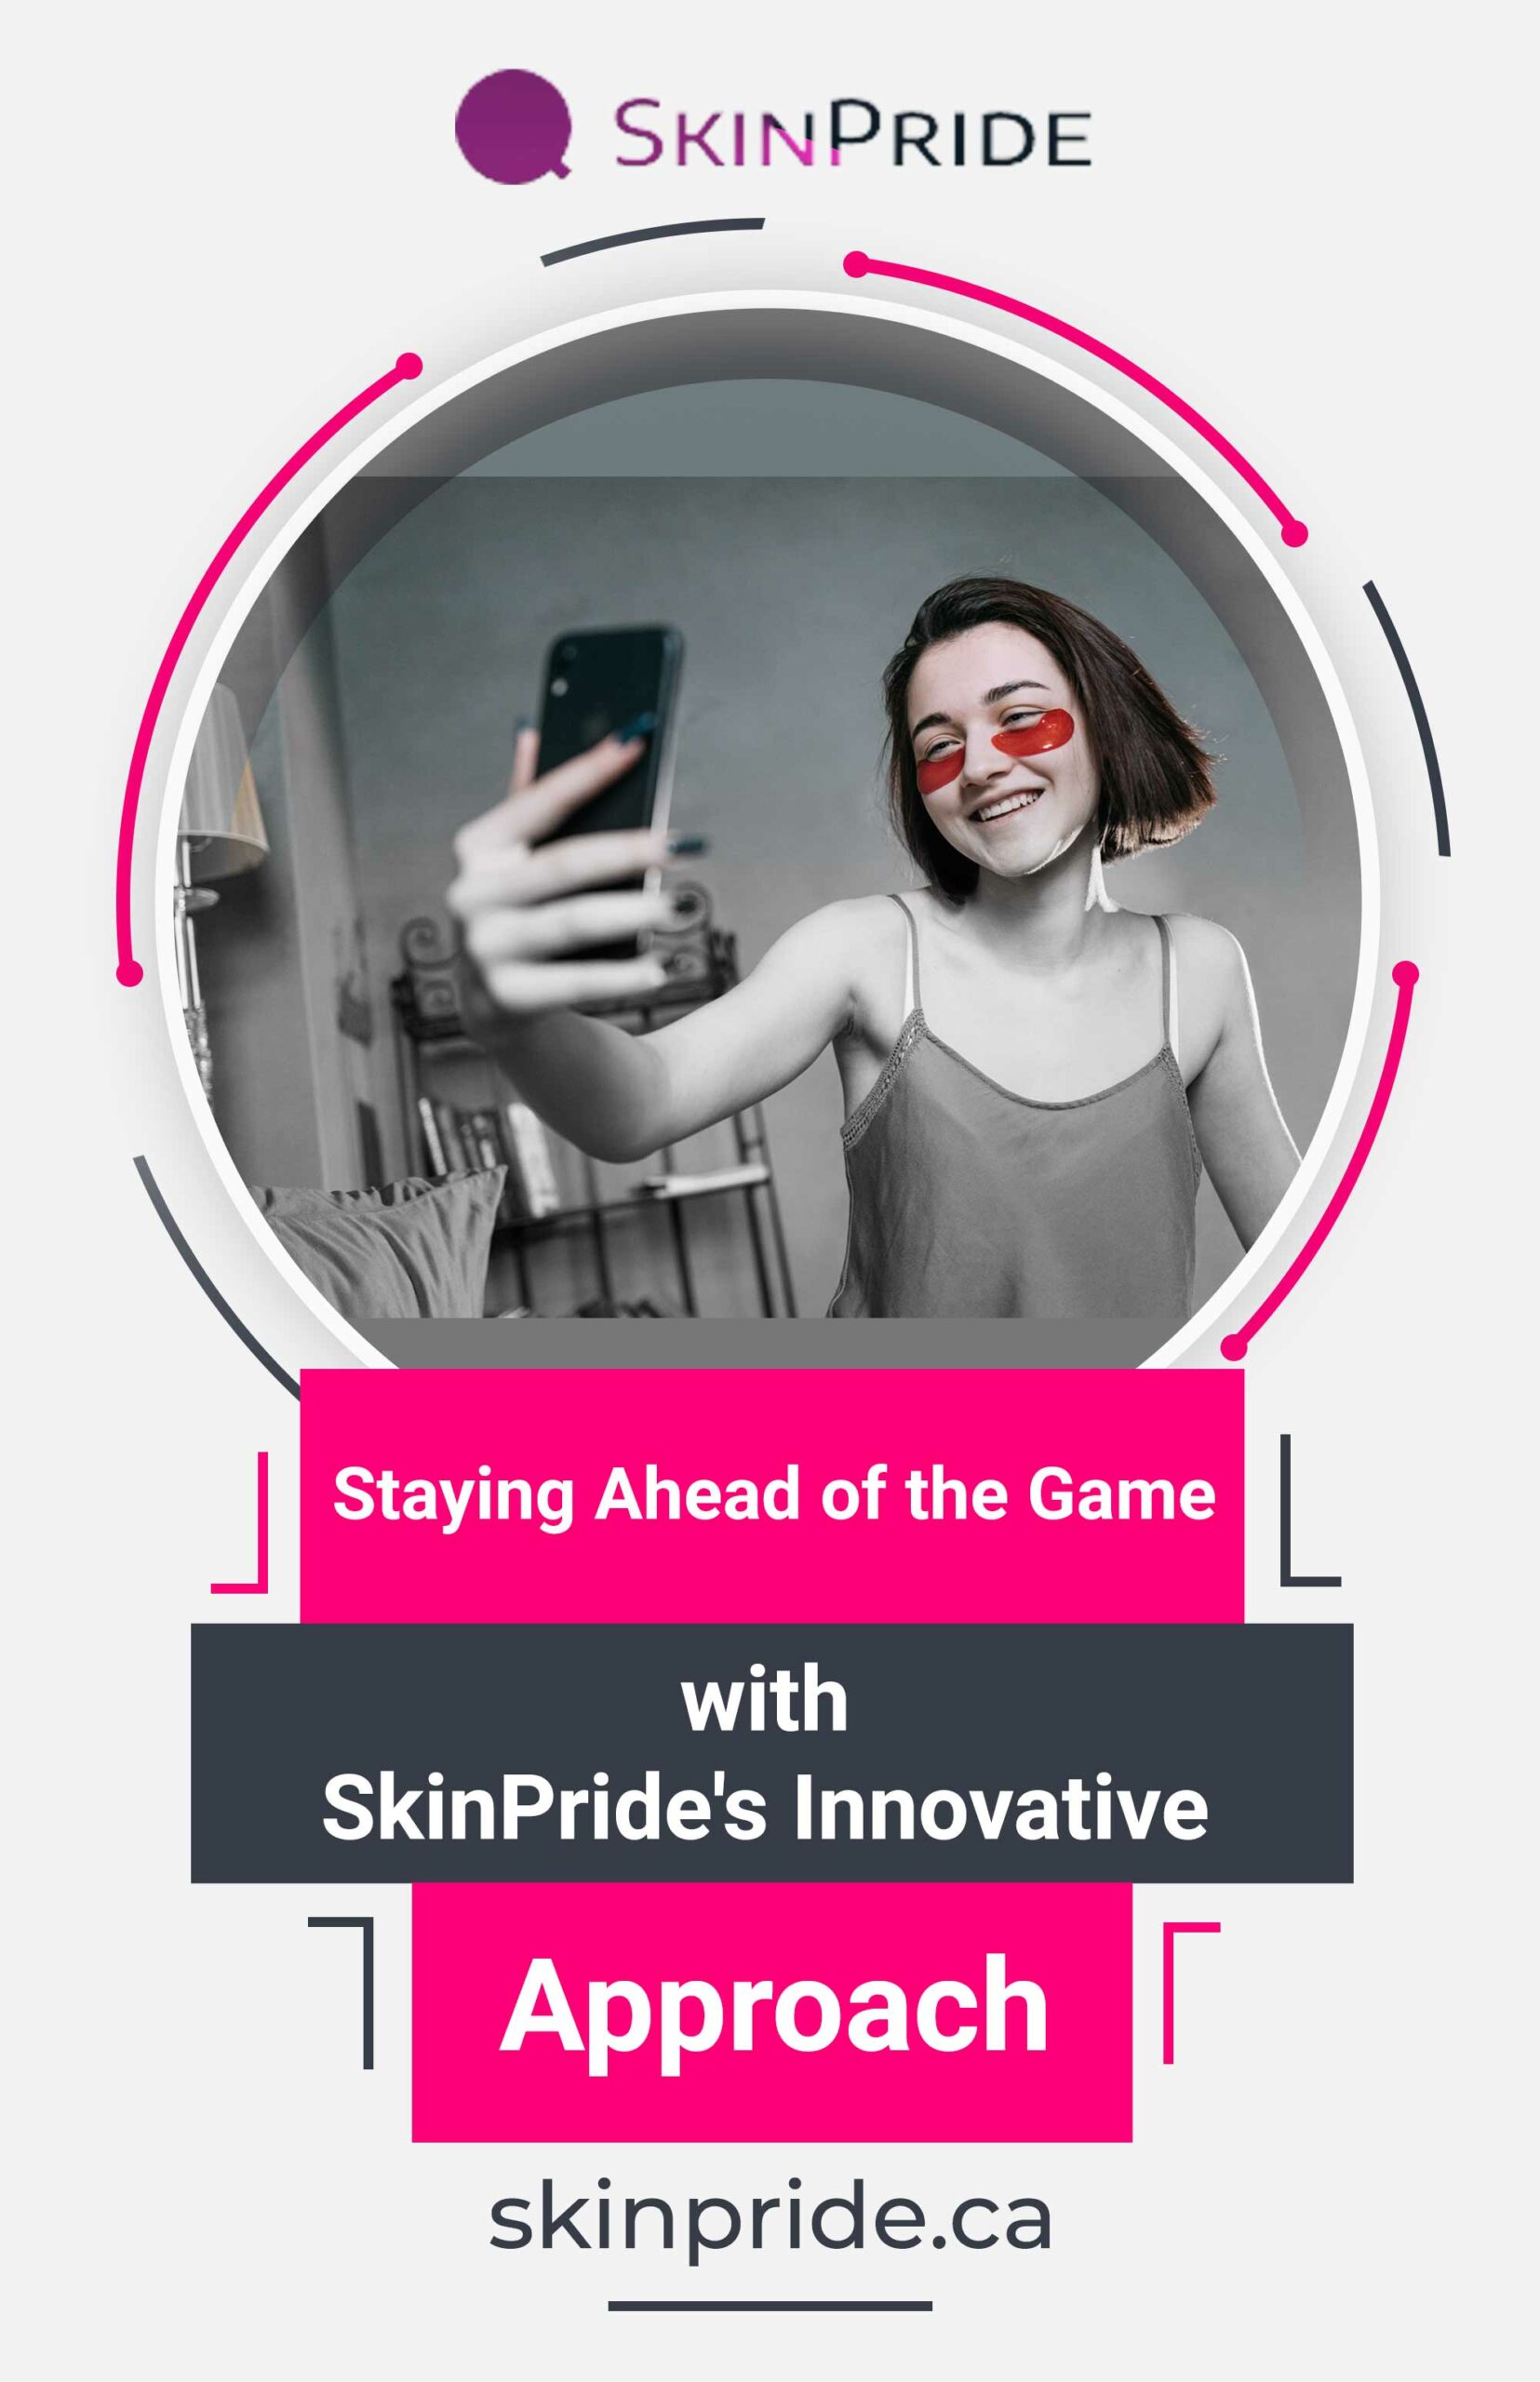 Take advantage of SkinPride’s innovative approach in 2023